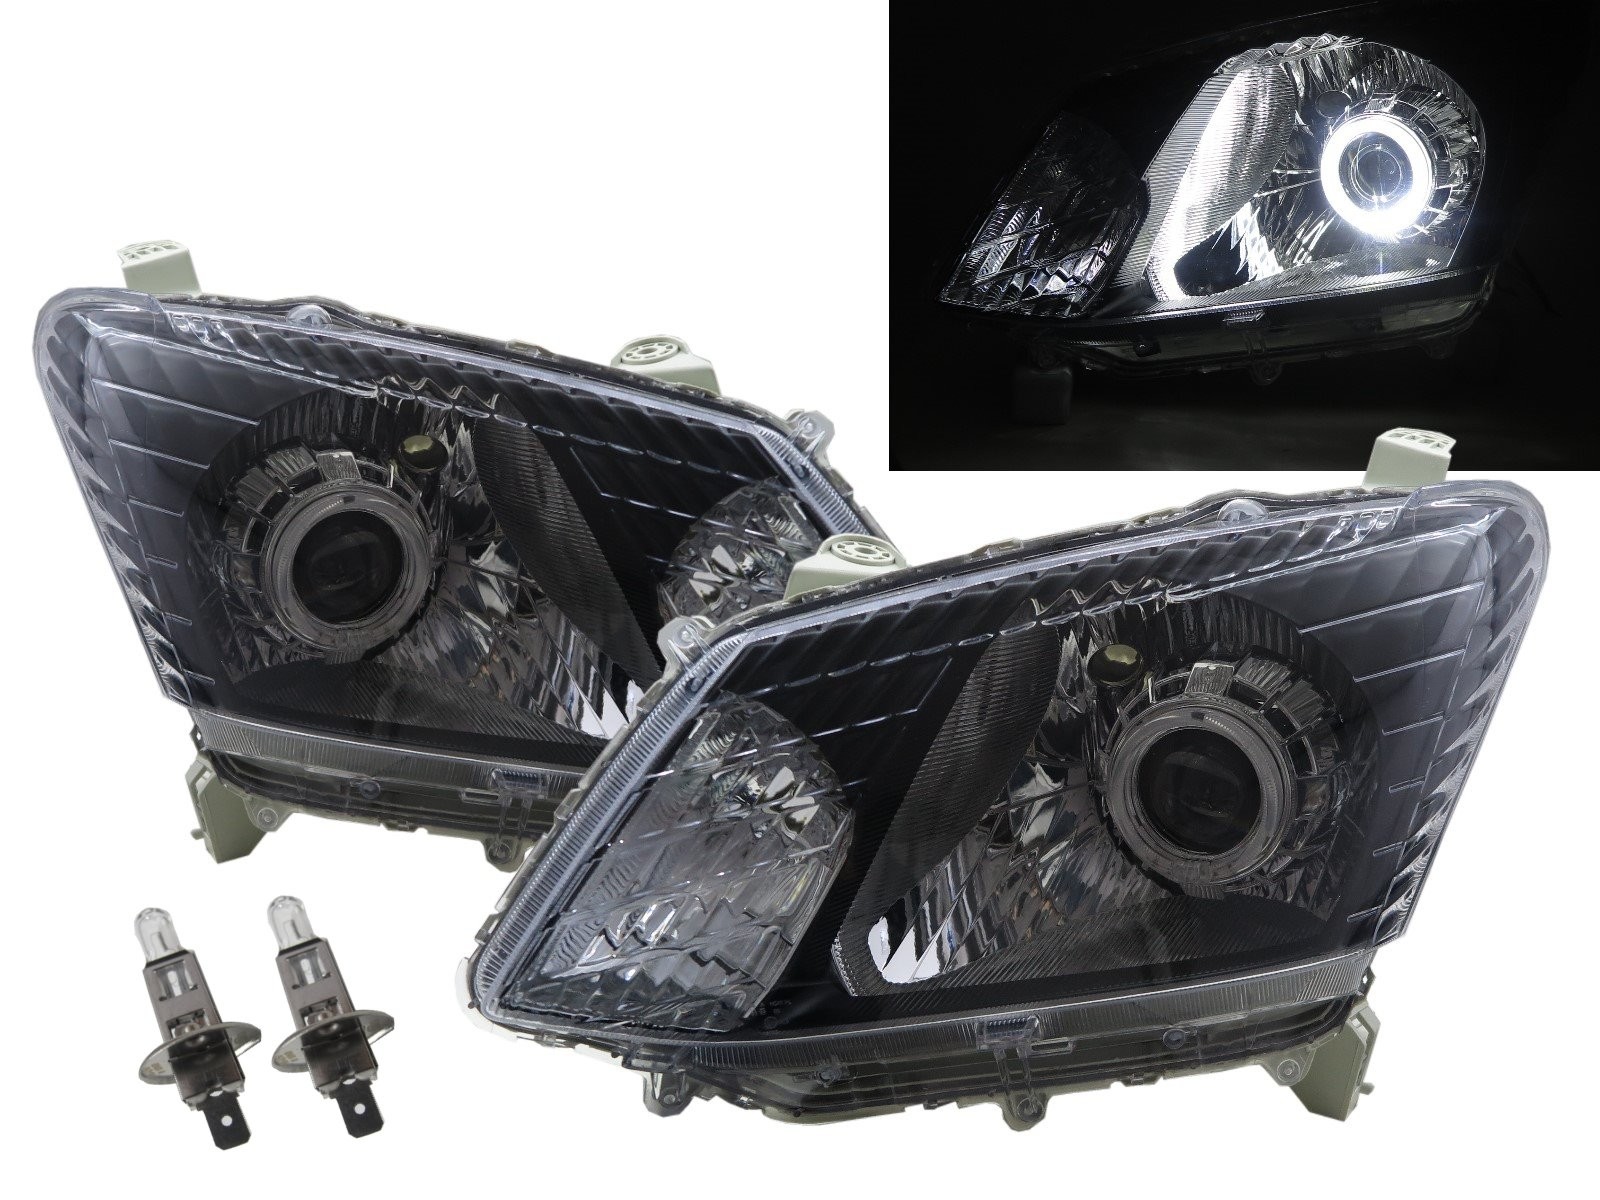 CrazyTheGod D-Max RT50 Second generation 2012-2015 Pre-Facelift Pickup Truck/Ute/Bakkie 2D/4D Guide LED Angel-Eye Projector Headlight Headlamp Black for ISUZU LHD